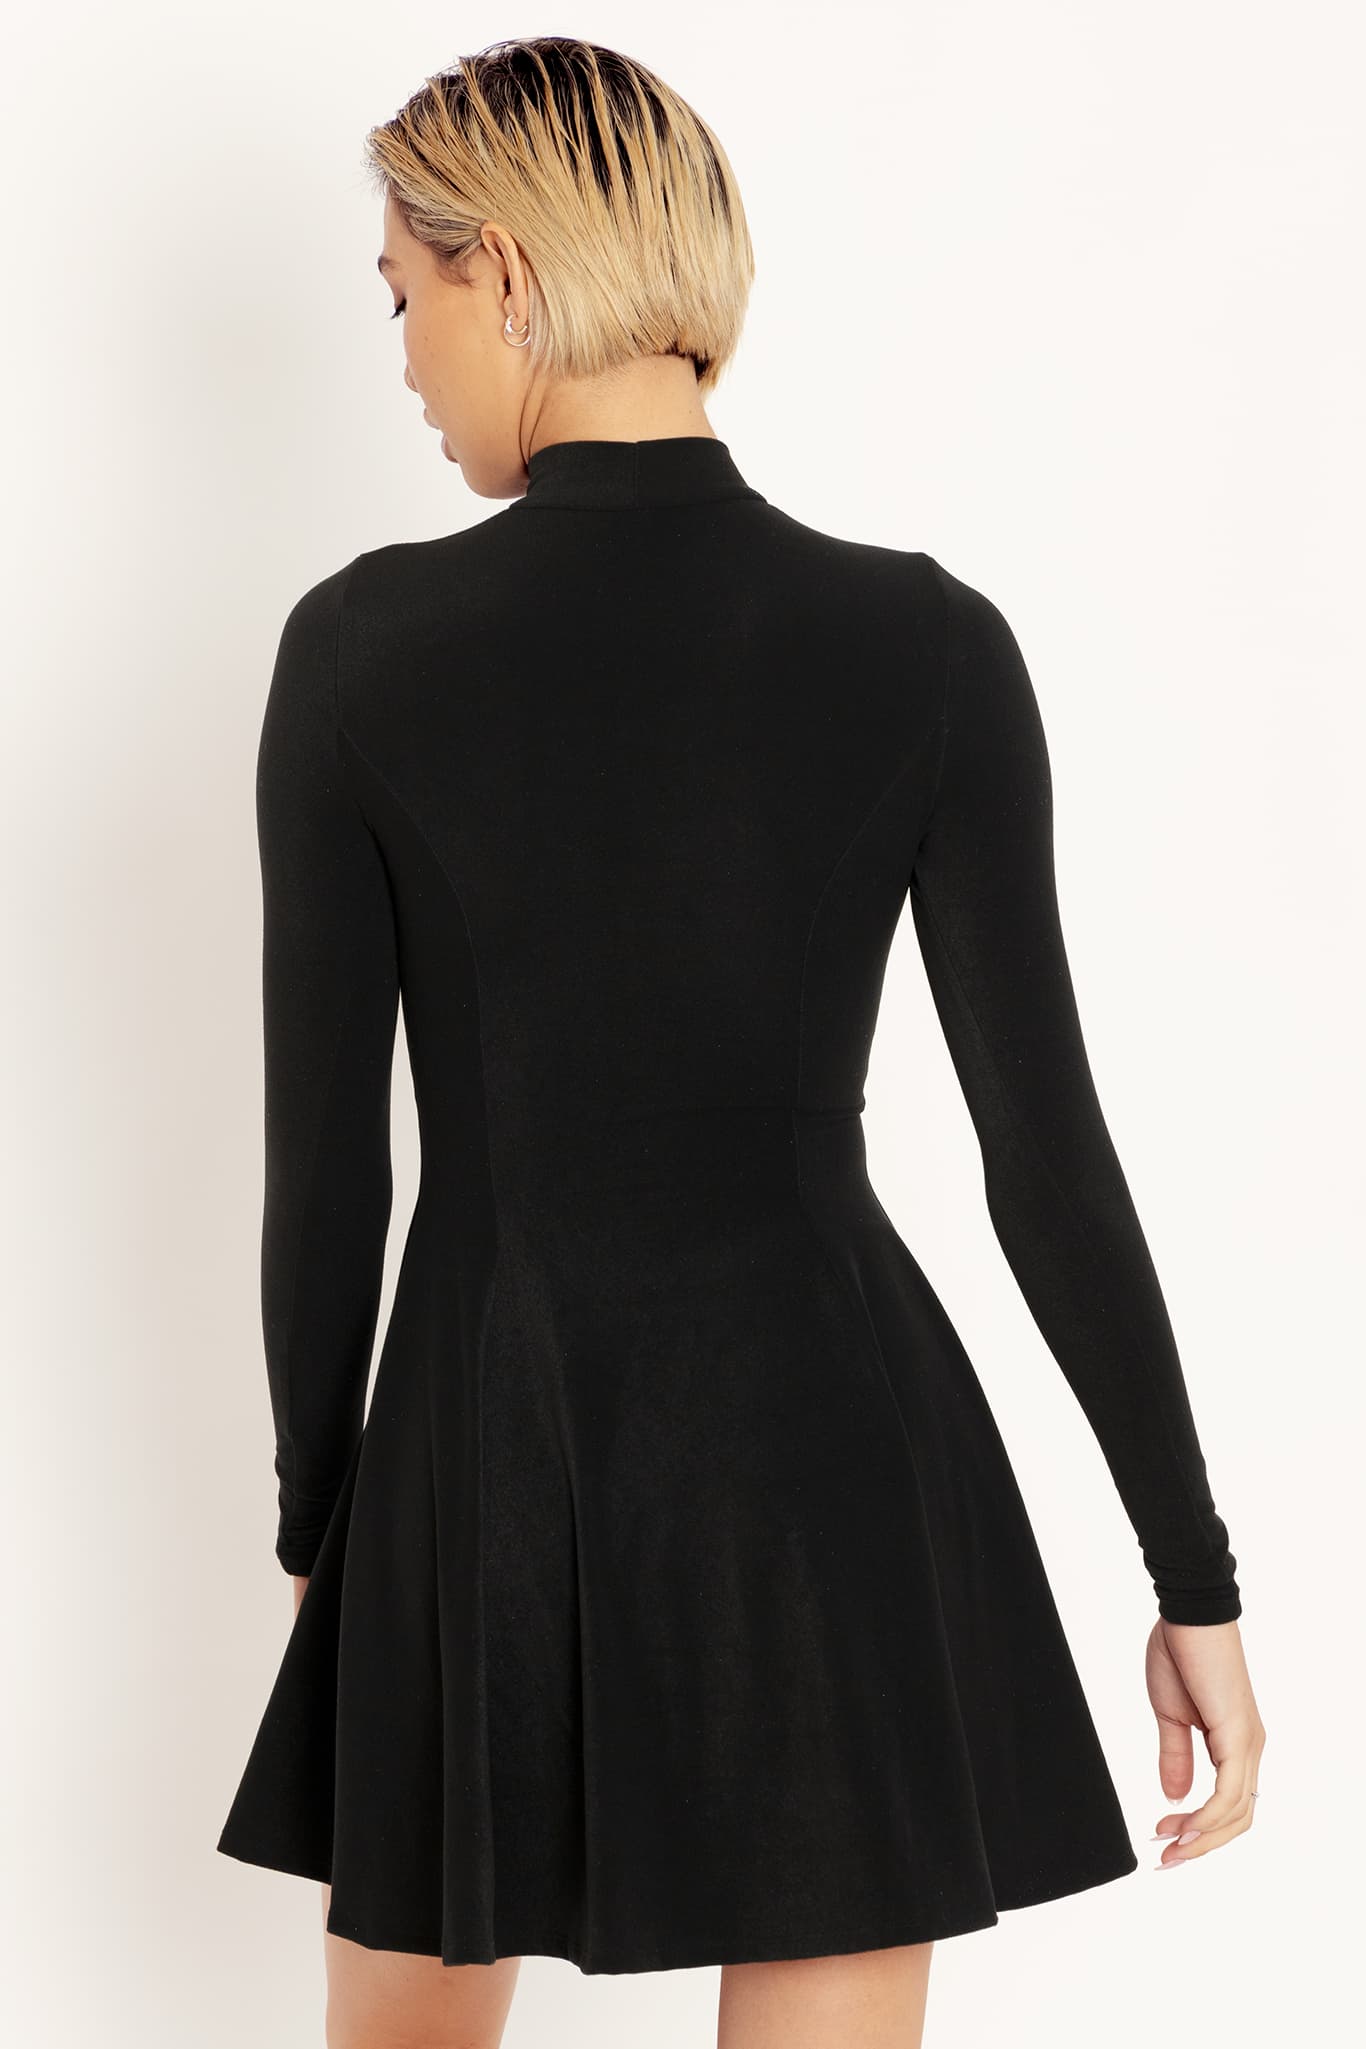 Warm Black Long Sleeve Evil Mini Skater Dress (SECONDS) - Limited